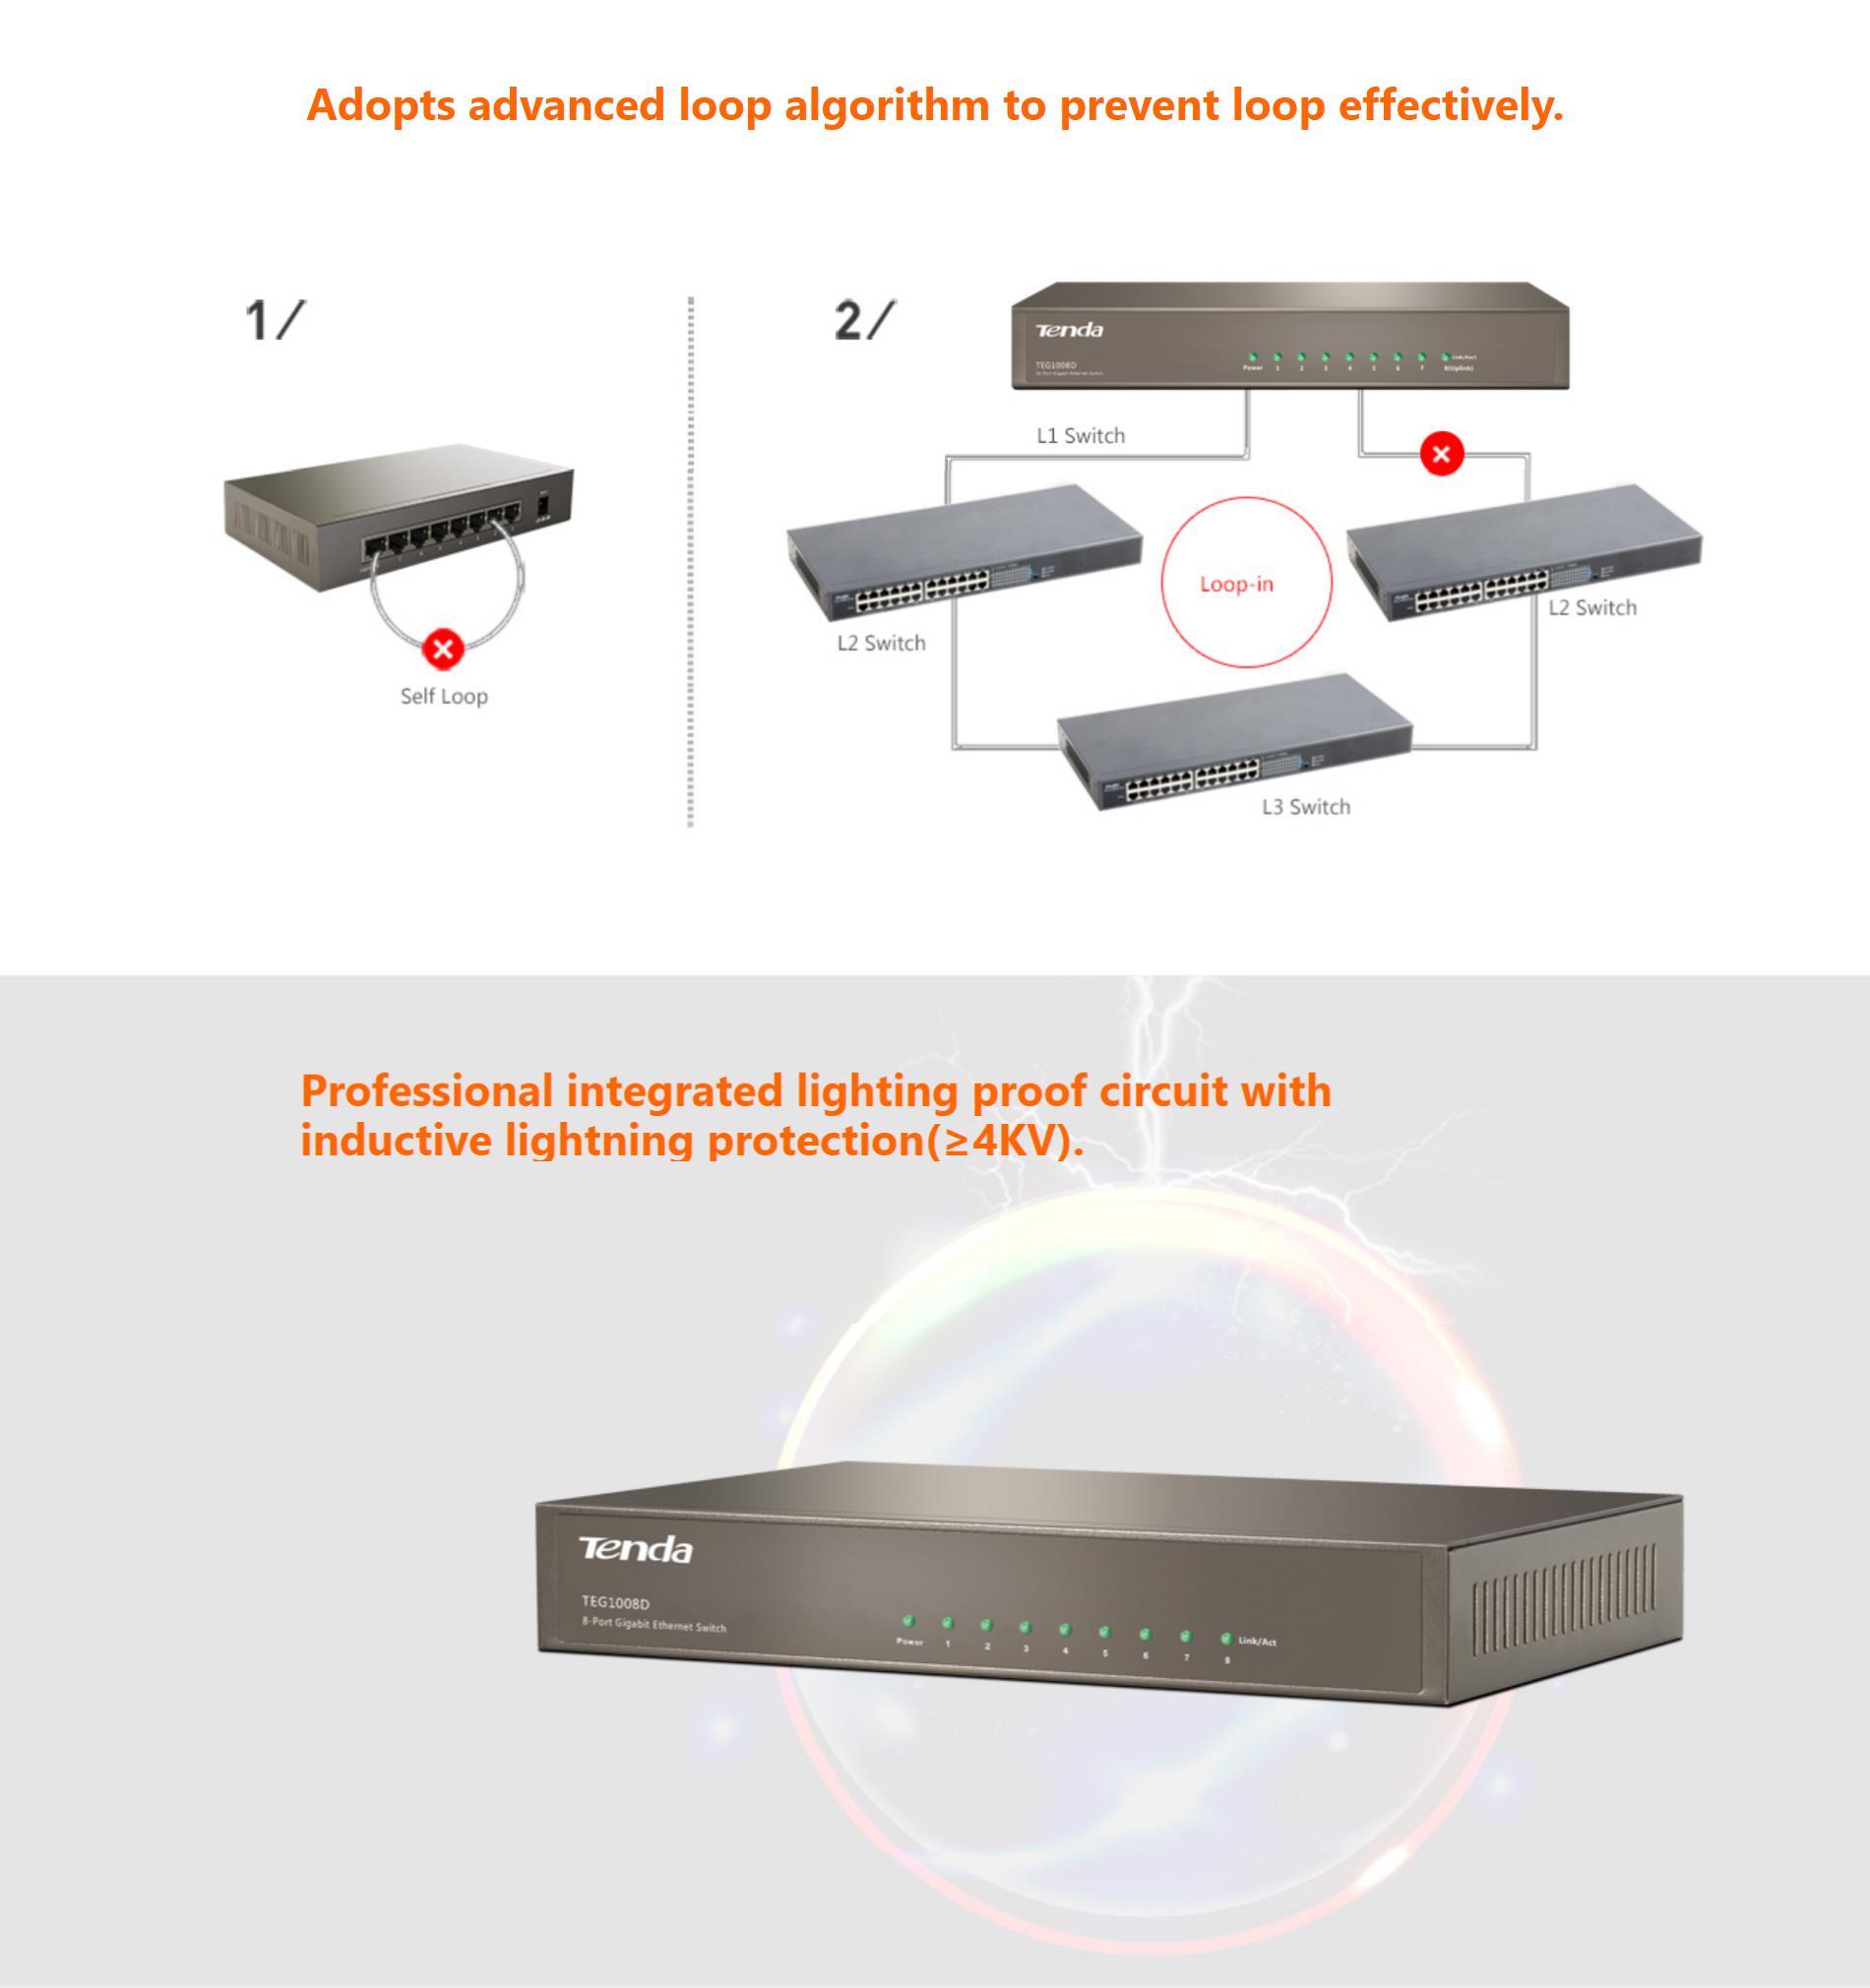 A large marketing image providing additional information about the product Tenda TEG1008D 8-Port Gigabit Desktop Switch - Additional alt info not provided